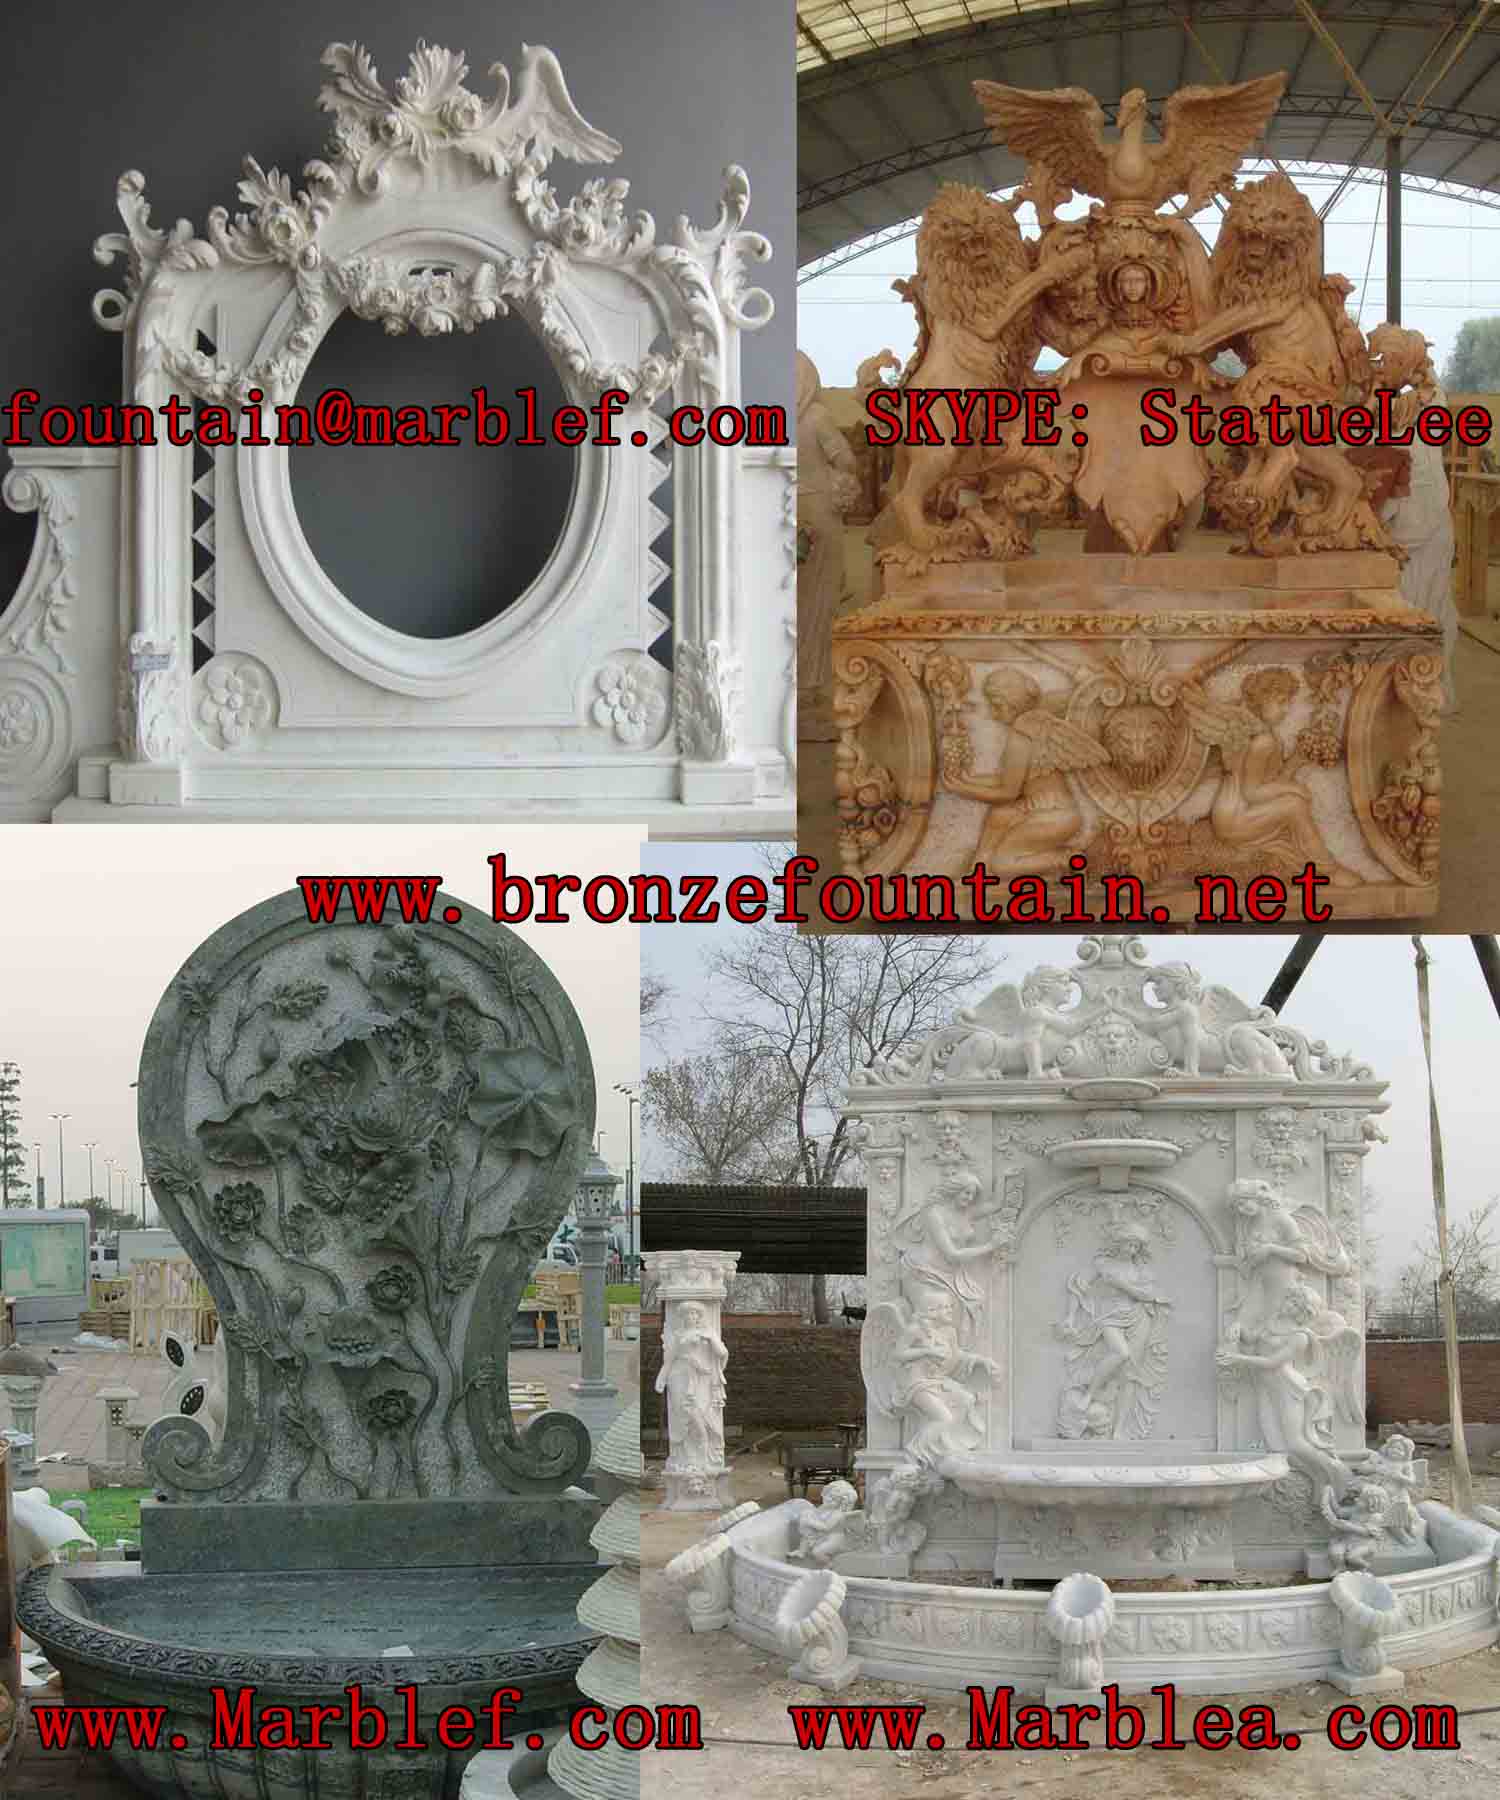 marble pedestals fountain,marble tier fountain,marble pedestals fountain